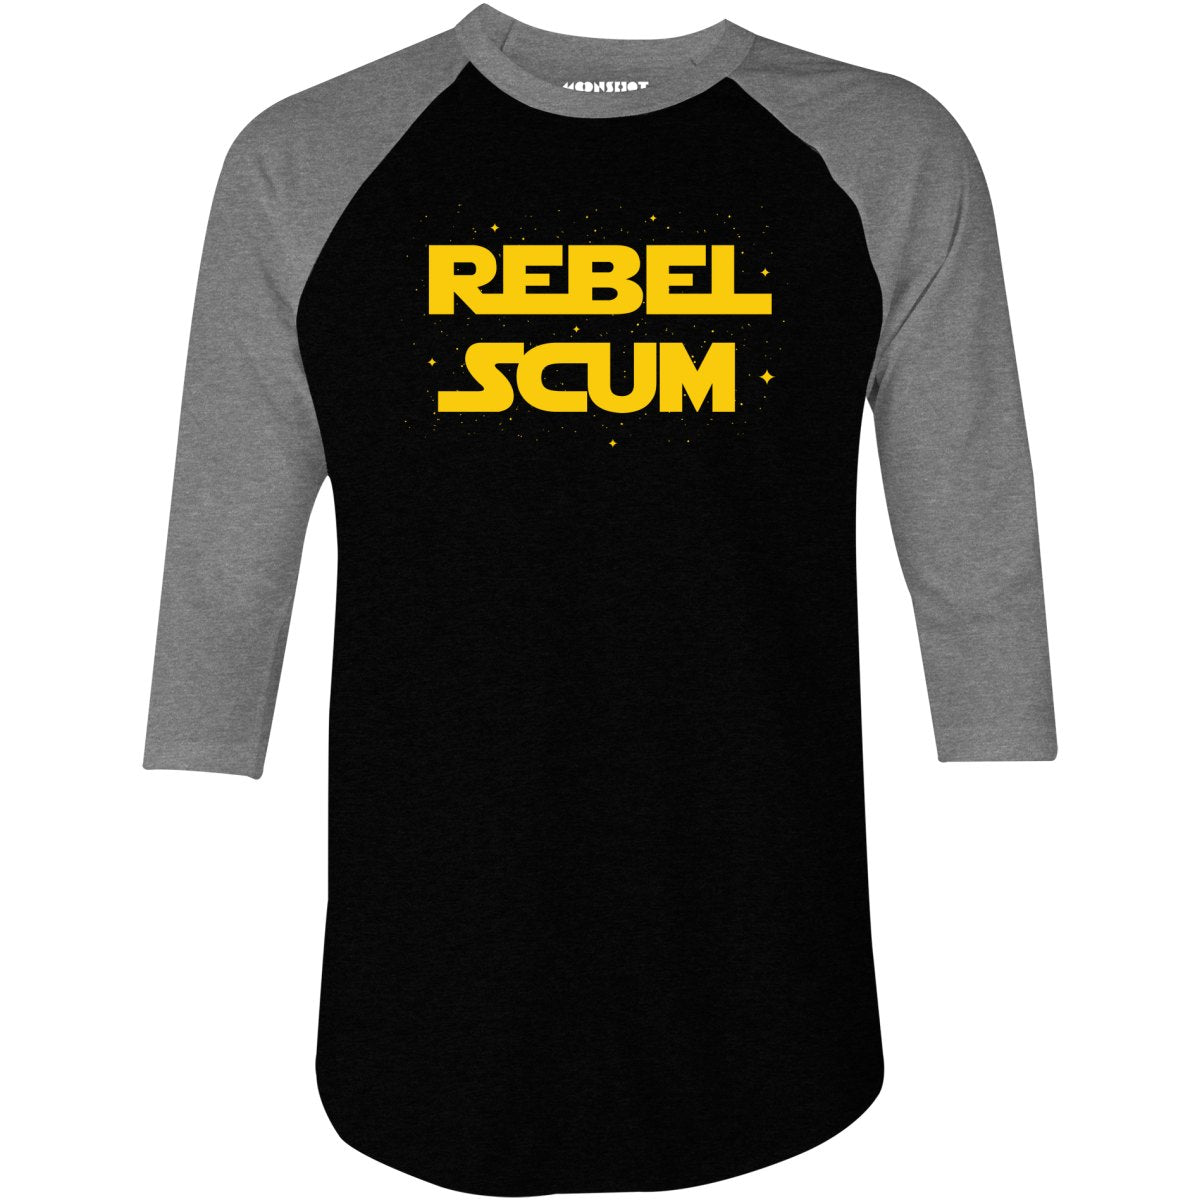 Rebel Scum - 3/4 Sleeve Raglan T-Shirt